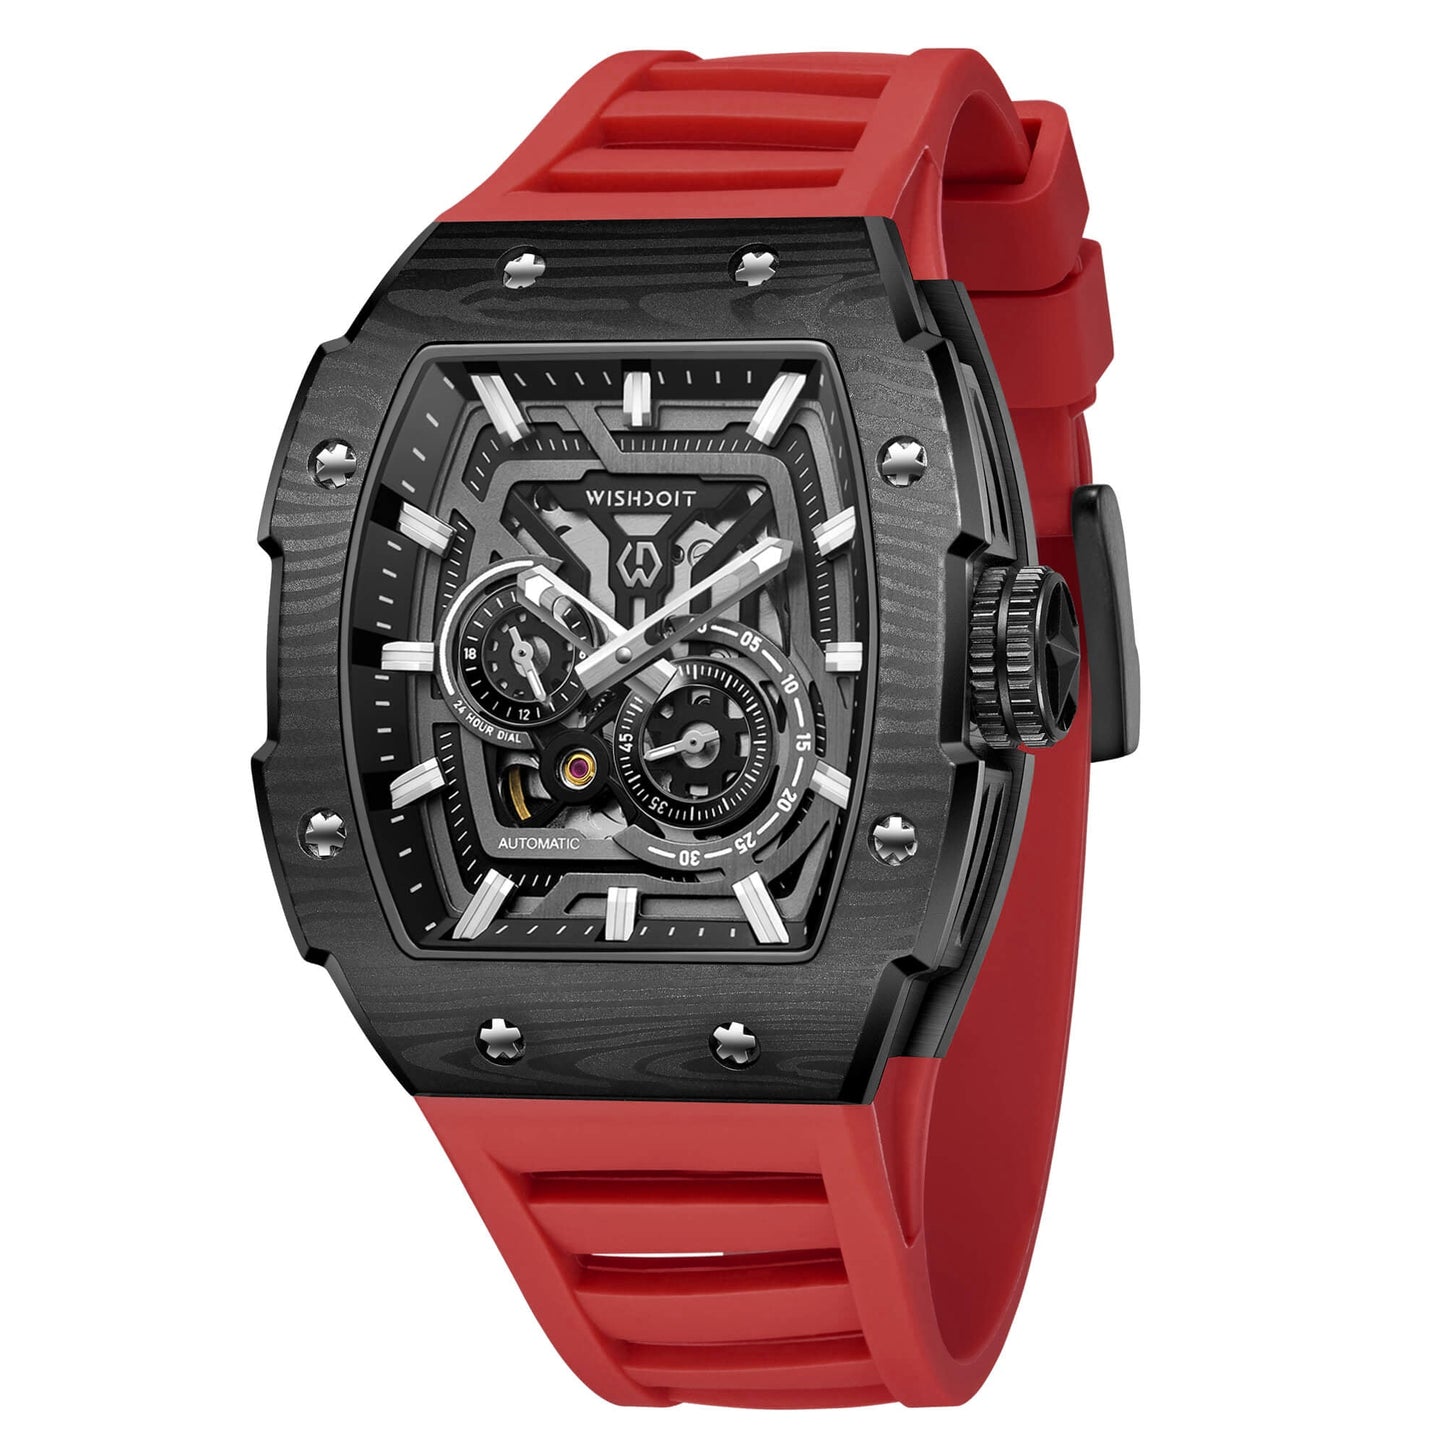 Wishdoit Watches Tonneau Affordable Best Mens Mechanical Full Speed Watch | Fluorine Rubber Watch Strap|Black (Red Strap)